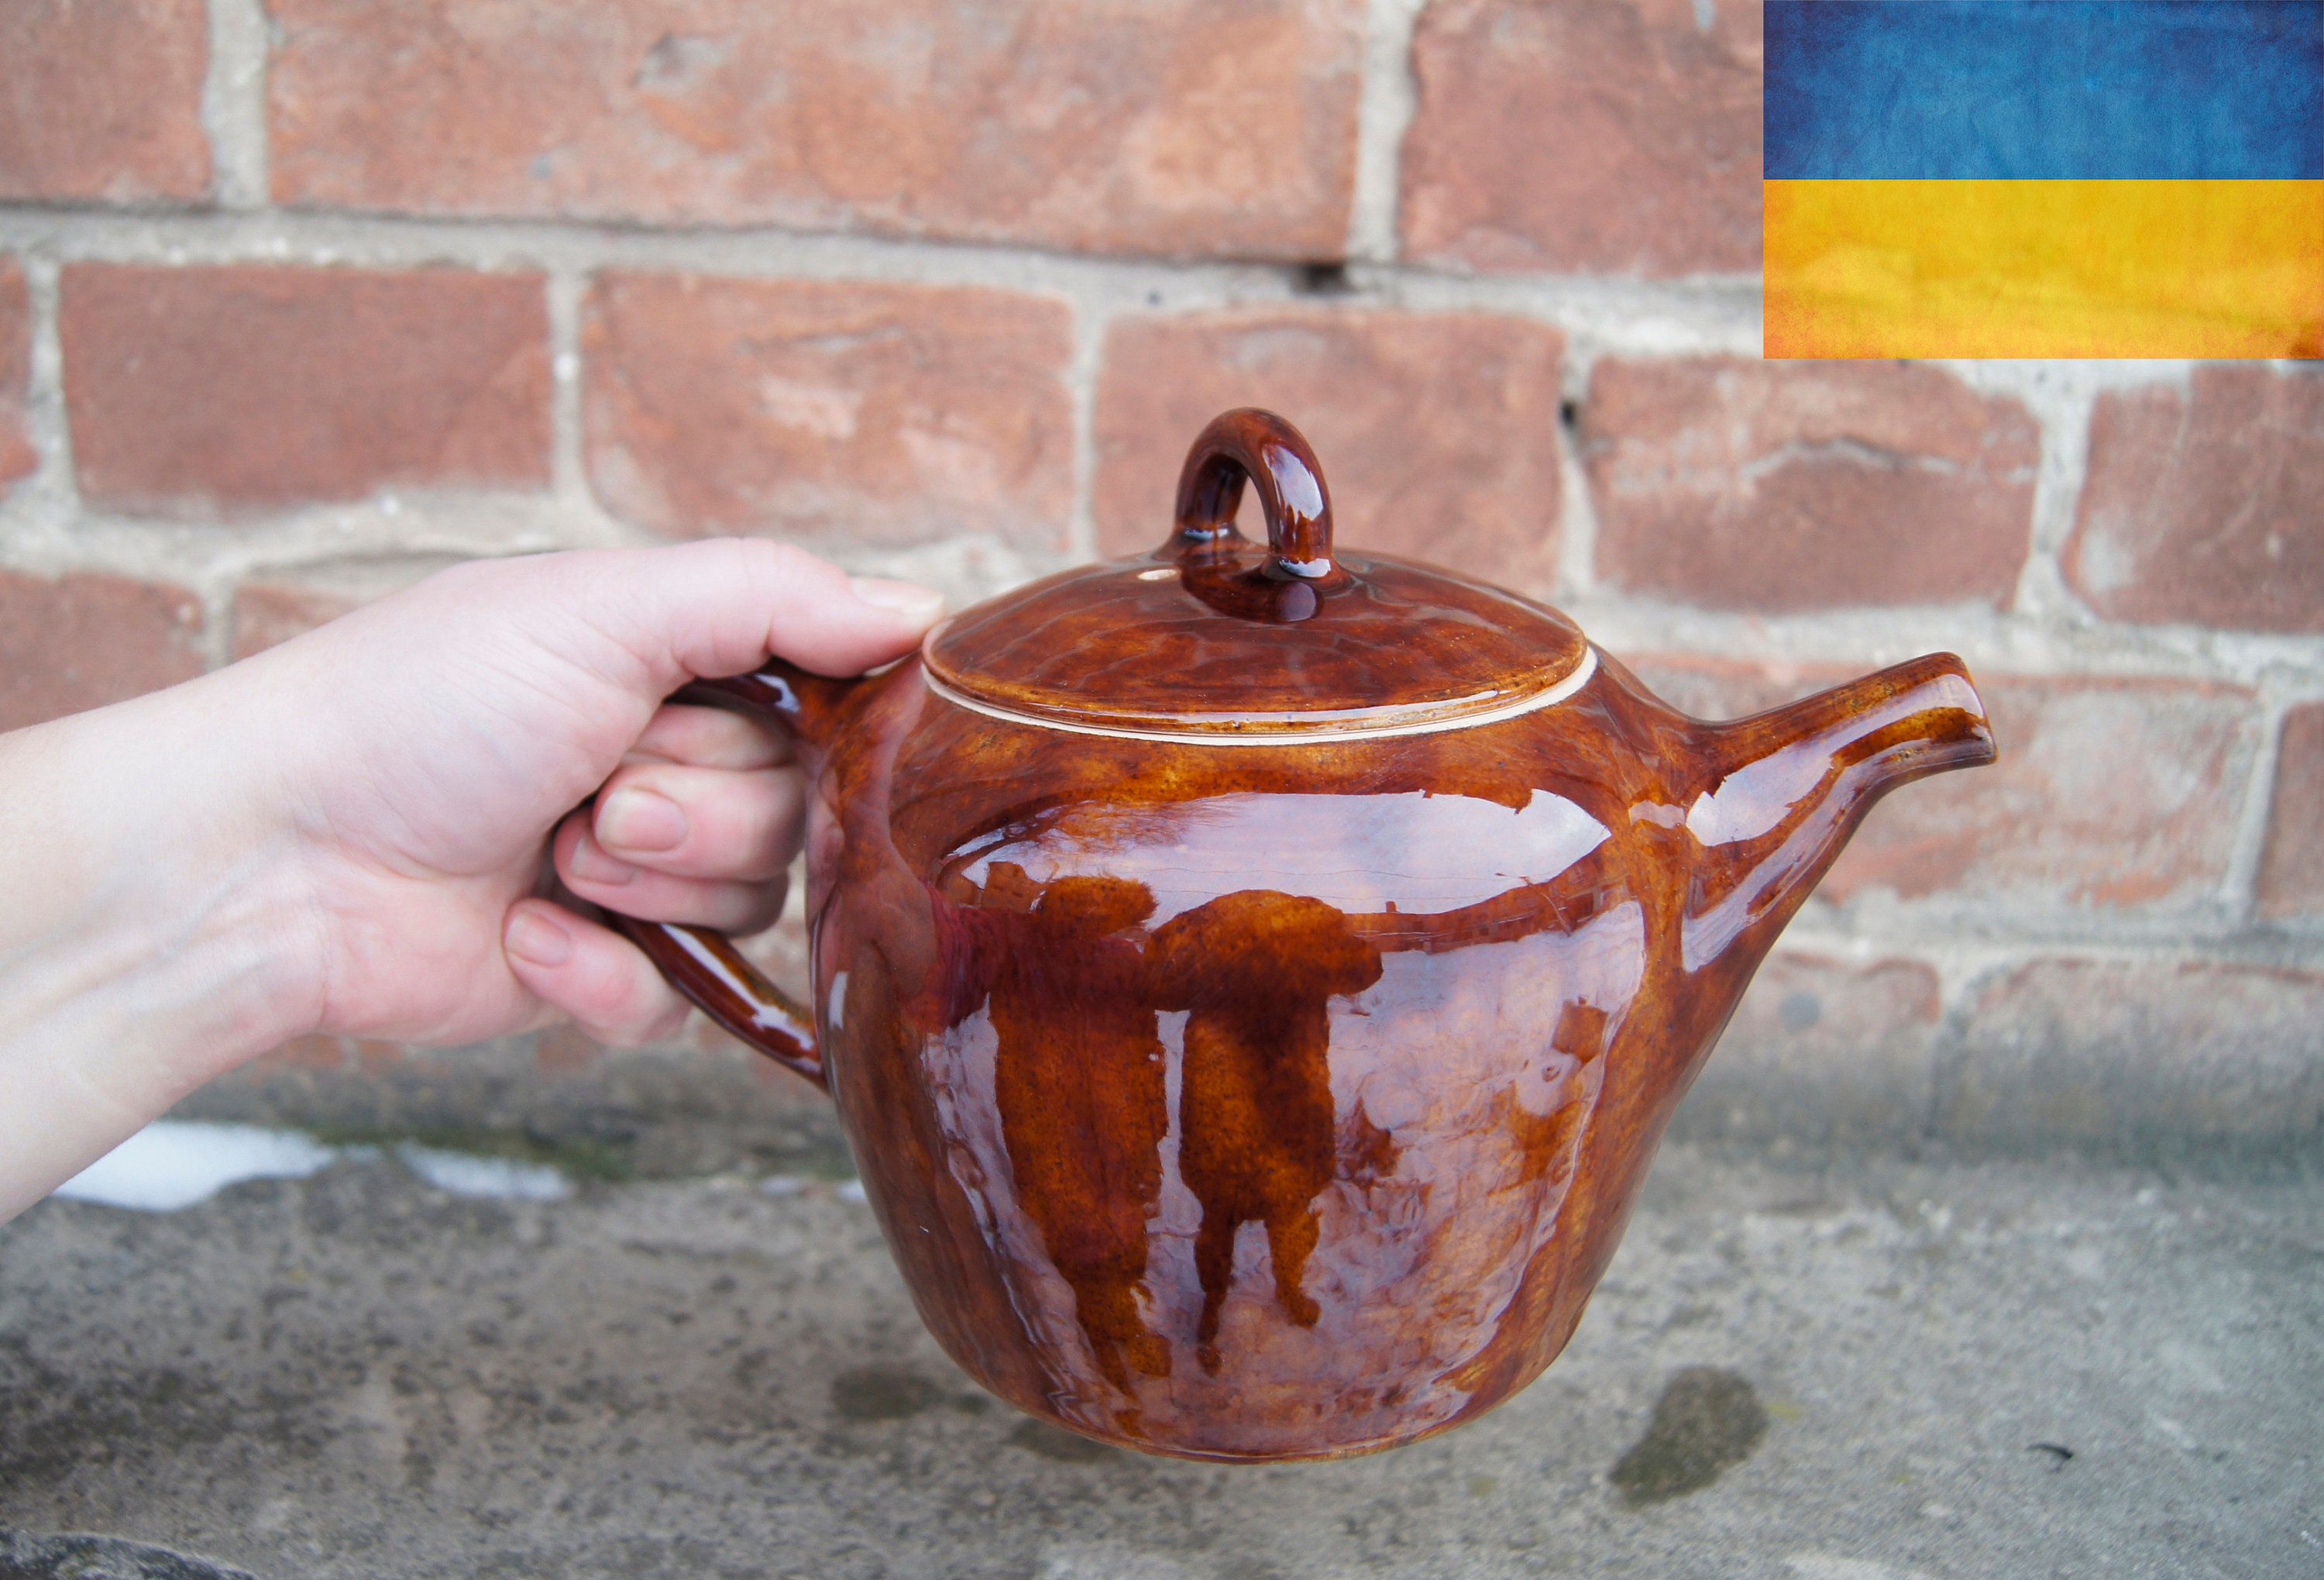 Ancient Glaze Teapot, Small (6oz)